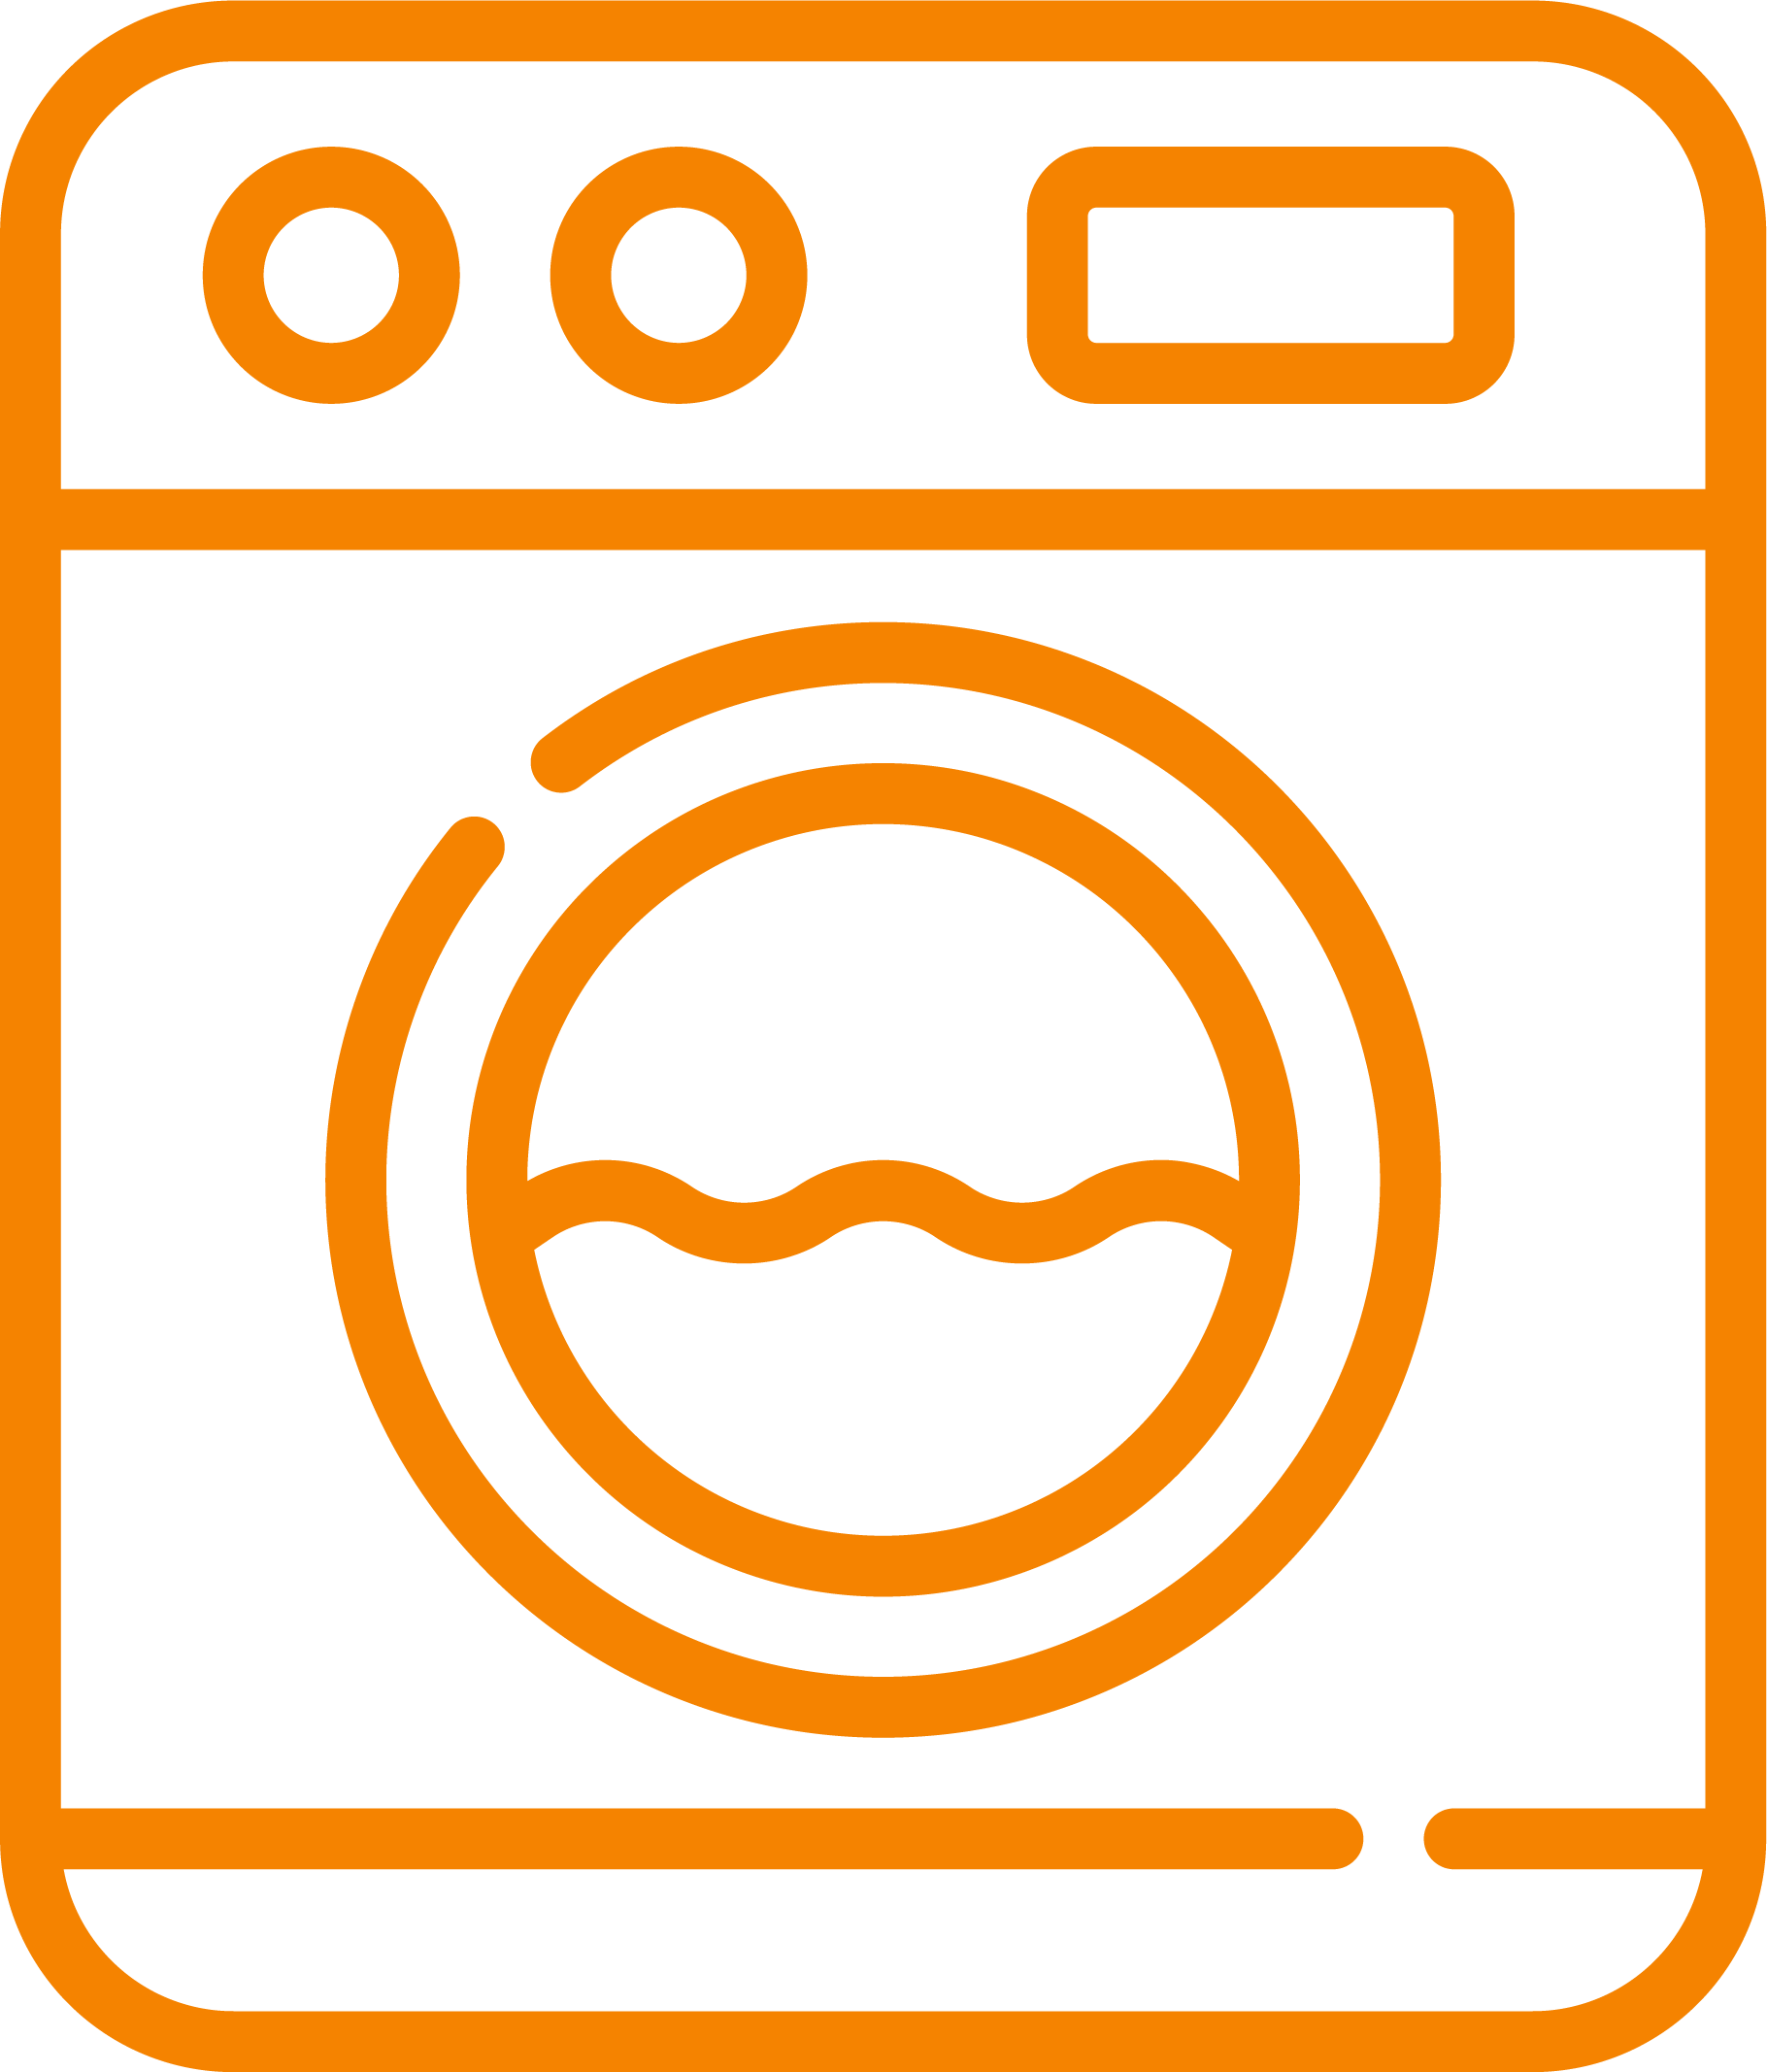 washer icon